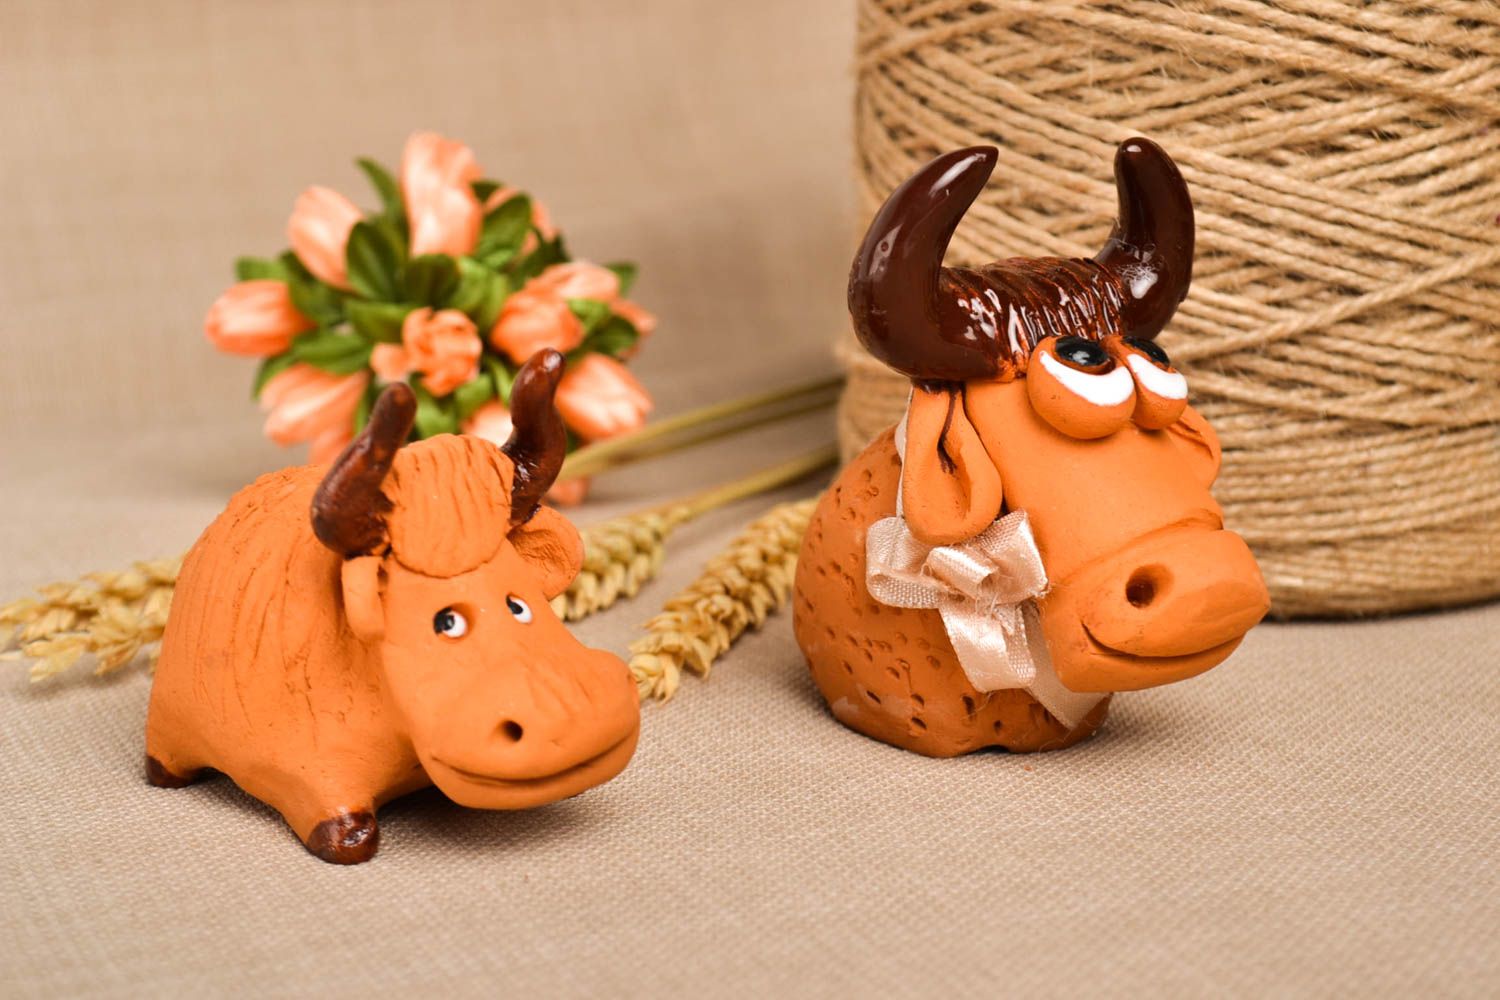 Handmade figurine designer statuette gift ideas decorative use only 2 items photo 1